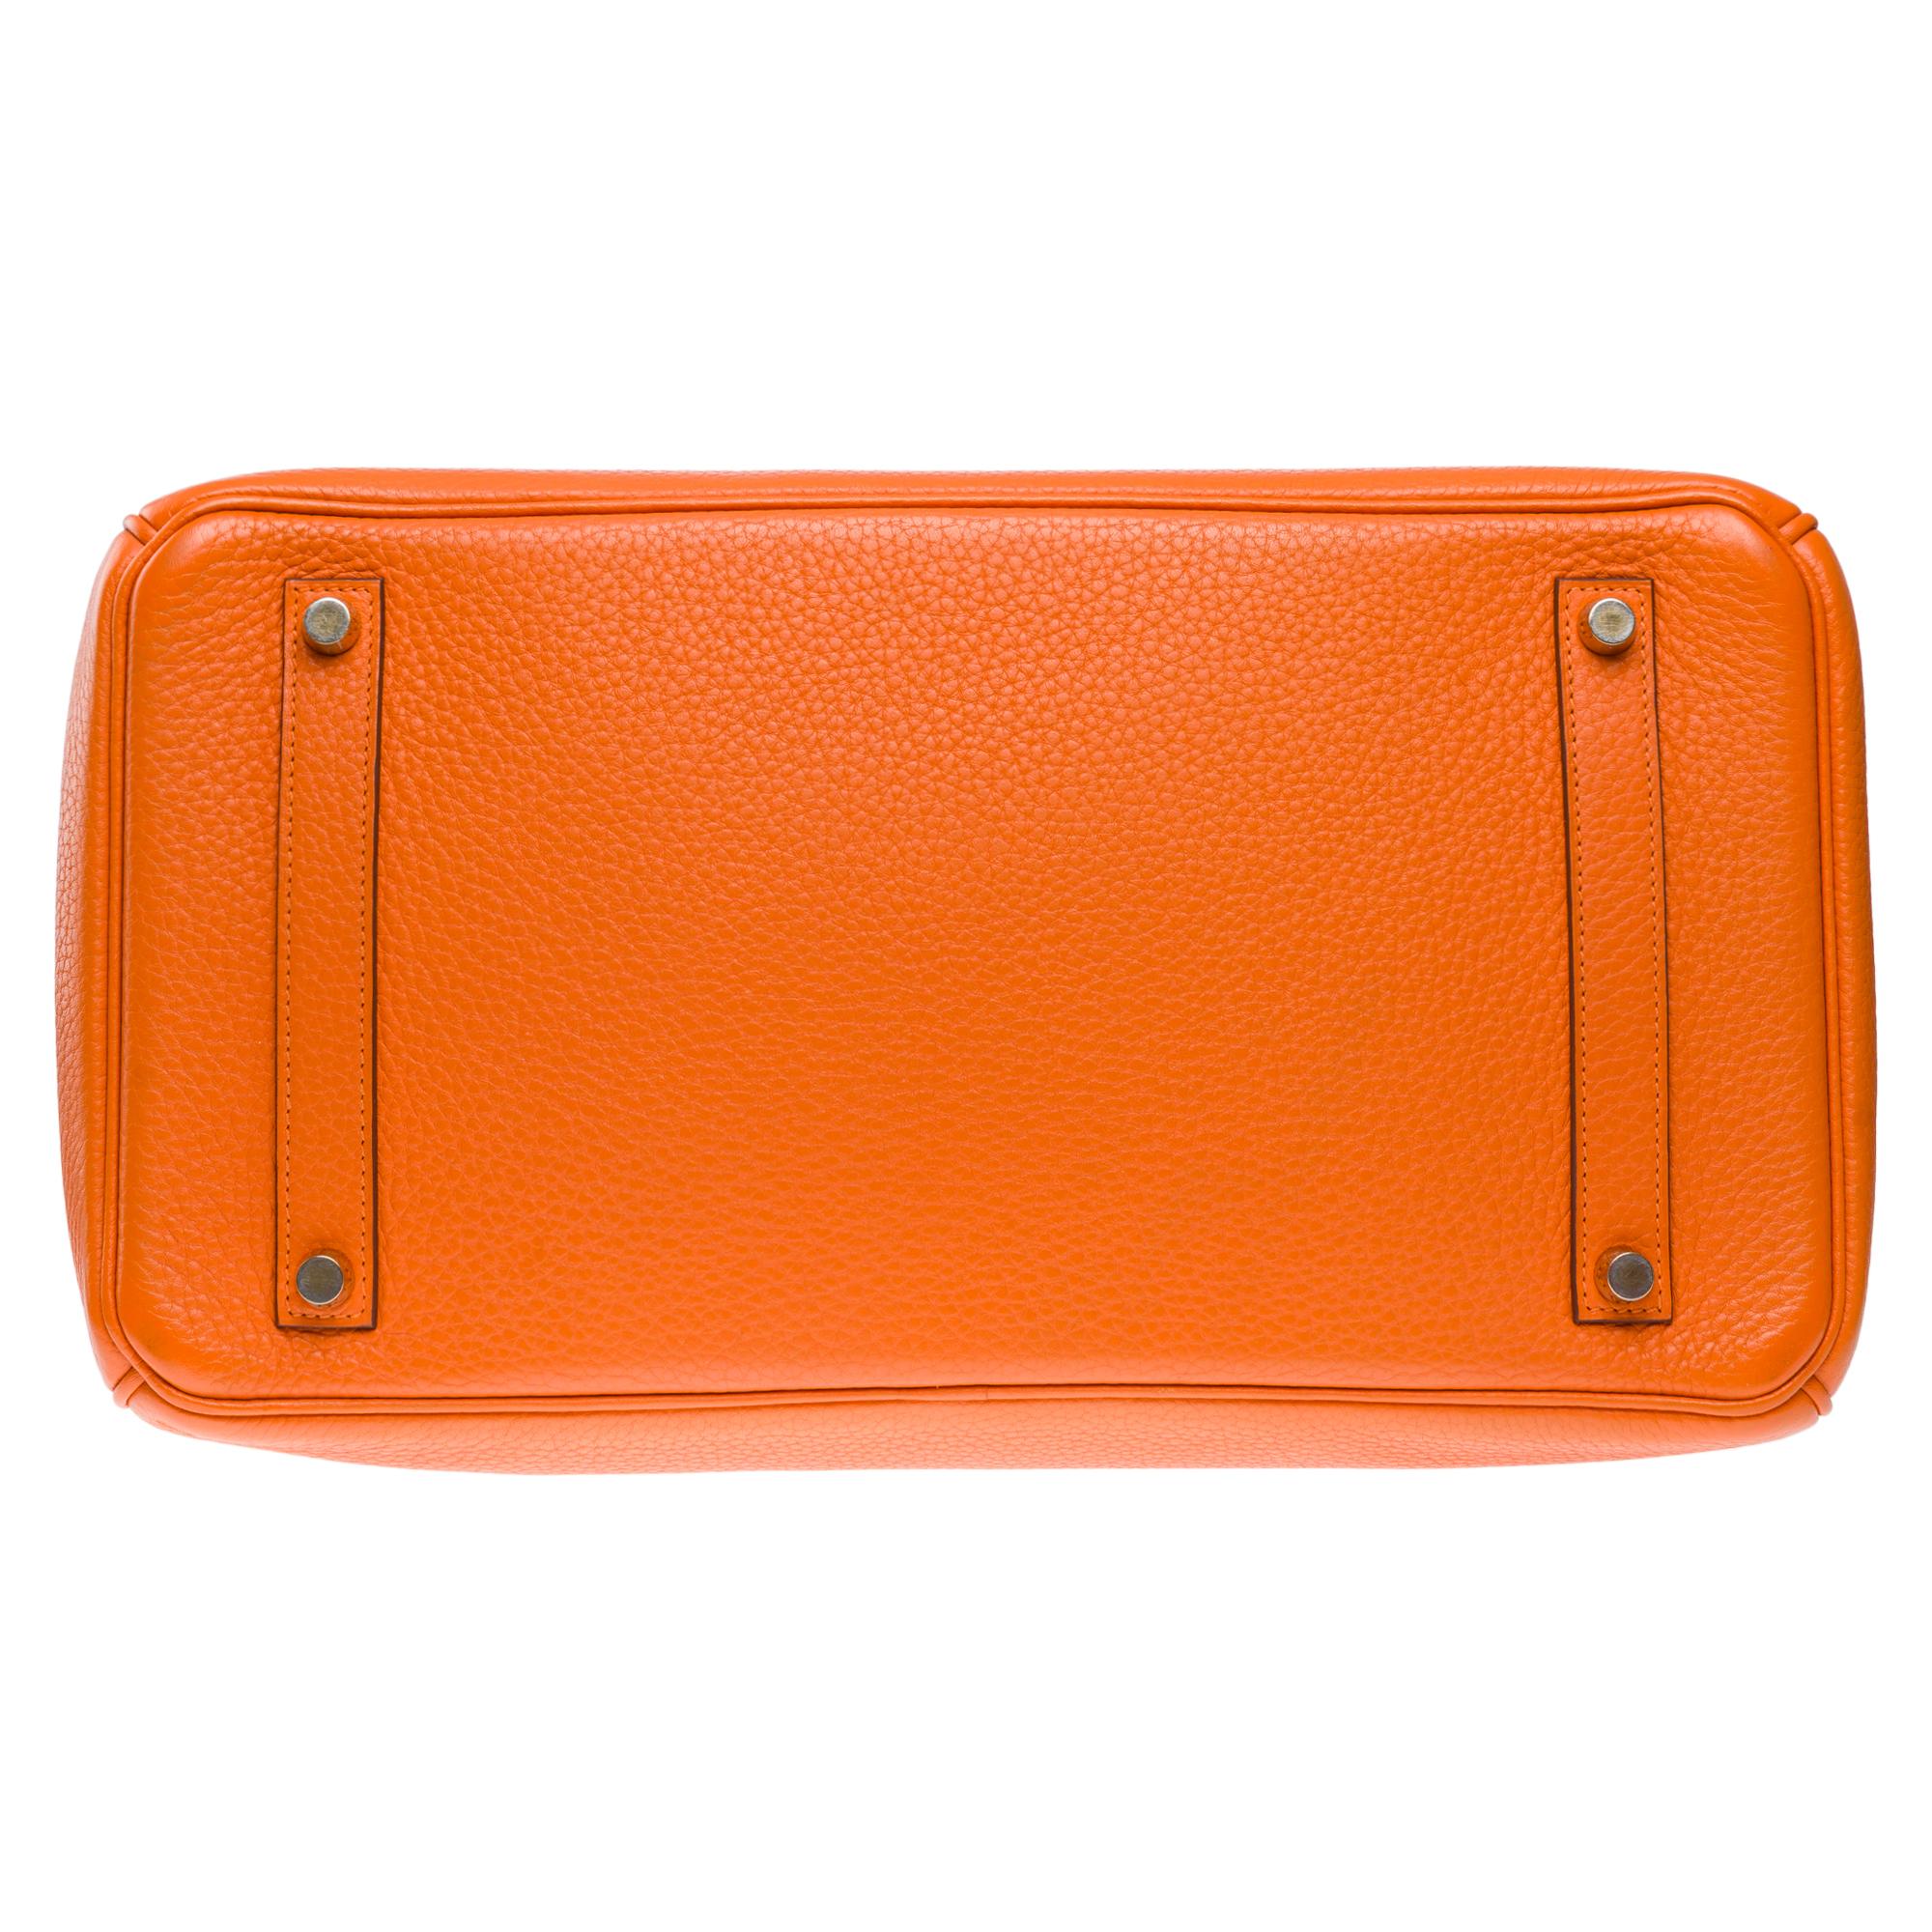 Amazing Hermès Birkin 35 handbag in Orange Togo Calf leather, GHW 6